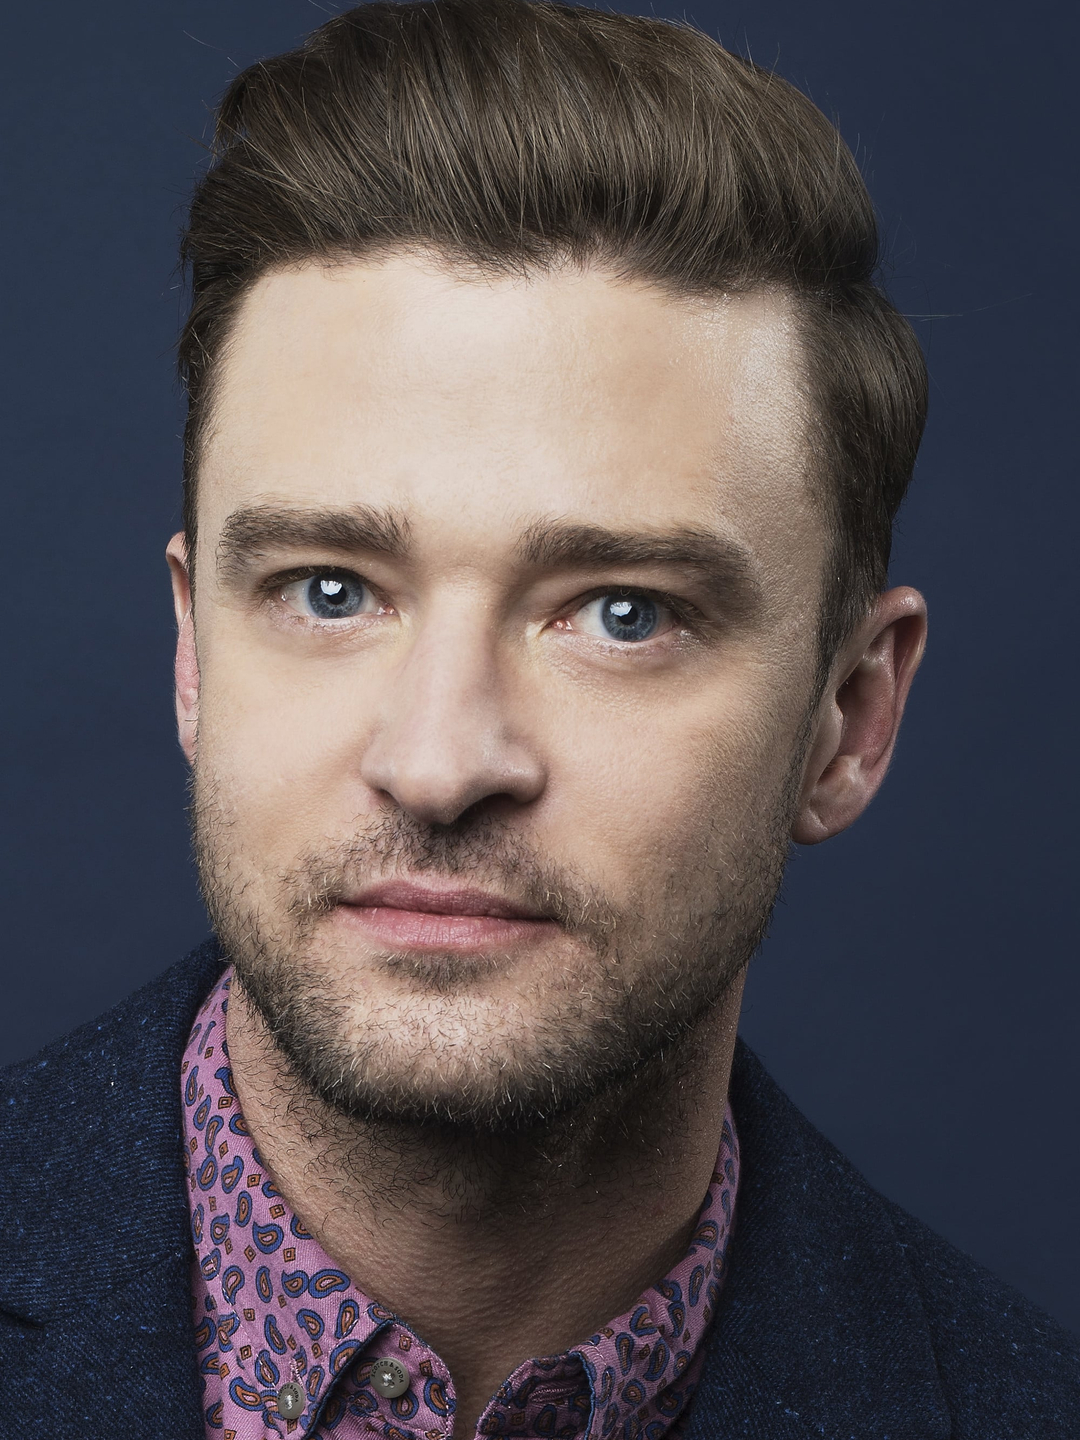 Justin Timberlake early life